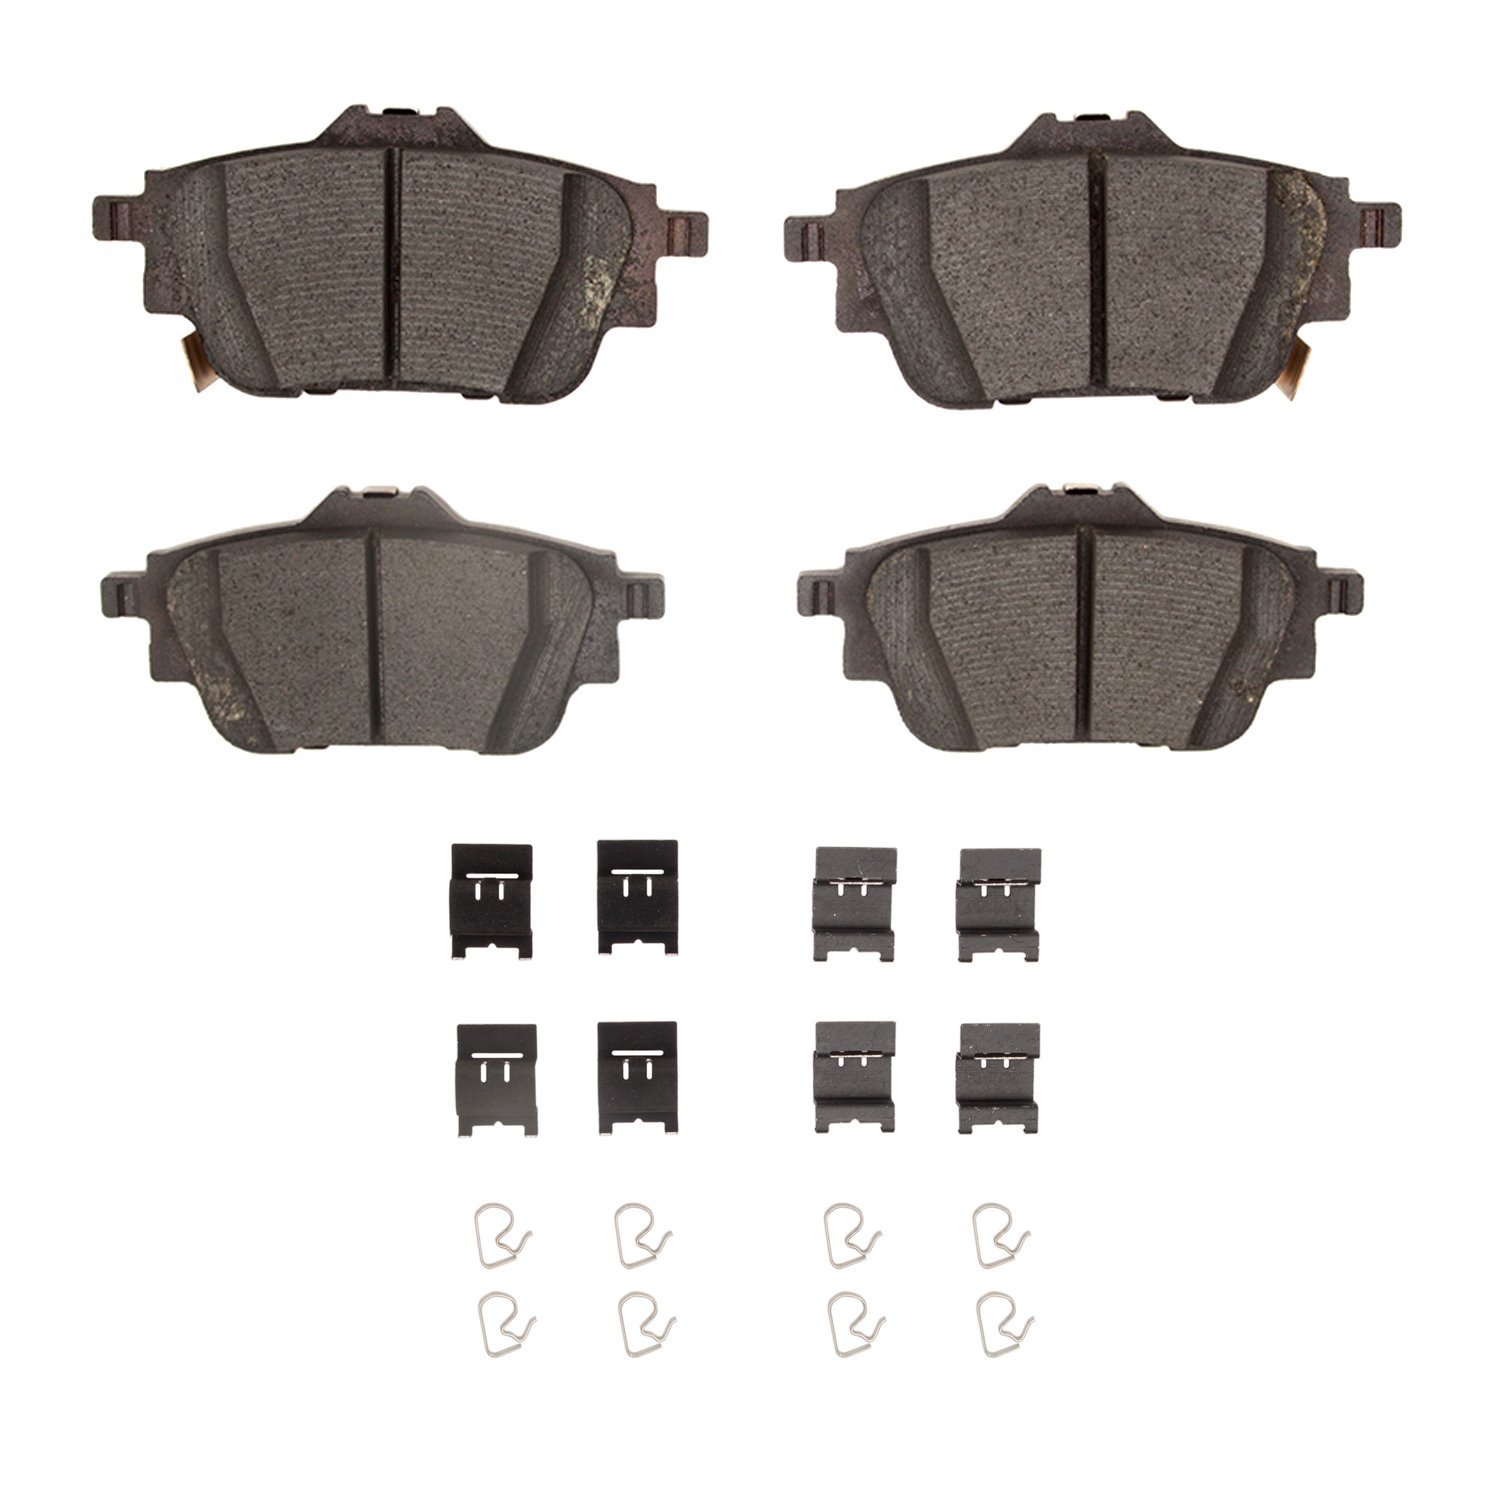 1551-2306-01 5000 Advanced Ceramic Brake Pads & Hardware Kit, Fits Select Infiniti/Nissan, Position: Rear